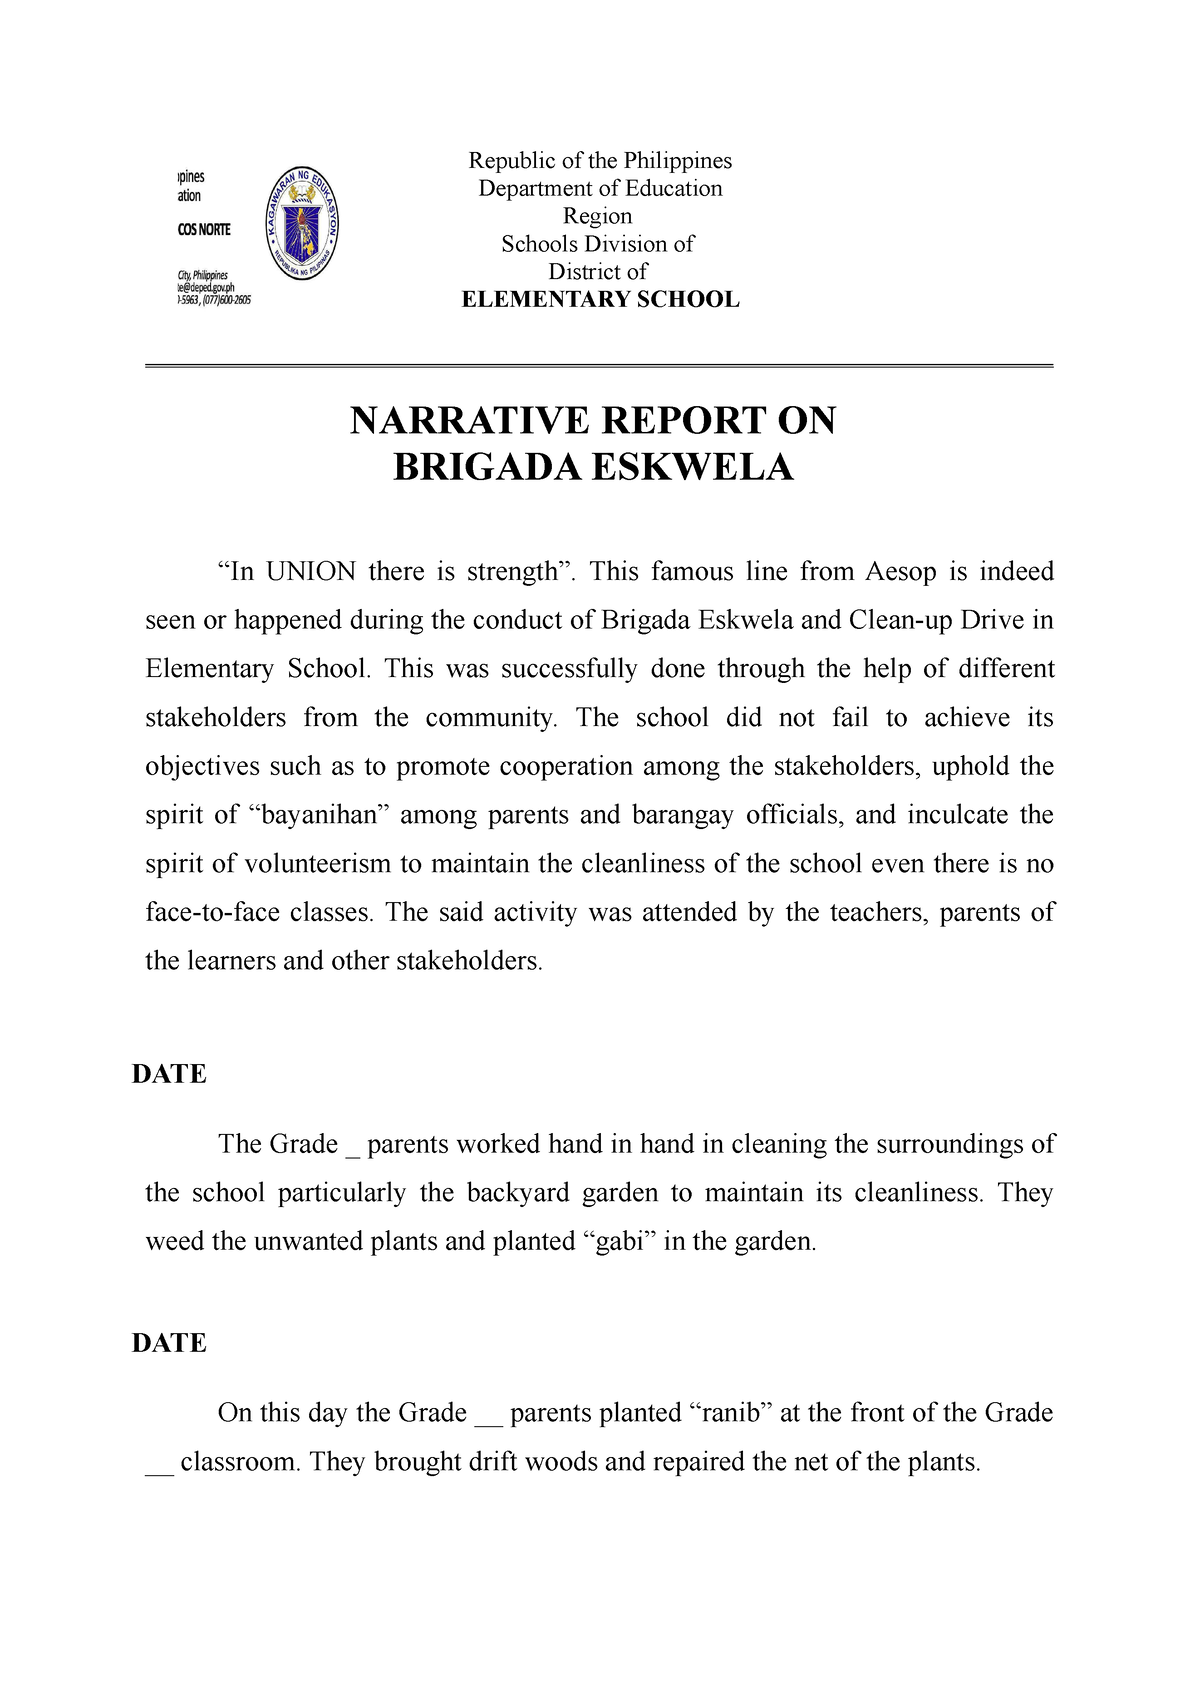 Brigada Eskewla Narrative Report Republic Of The Philippines